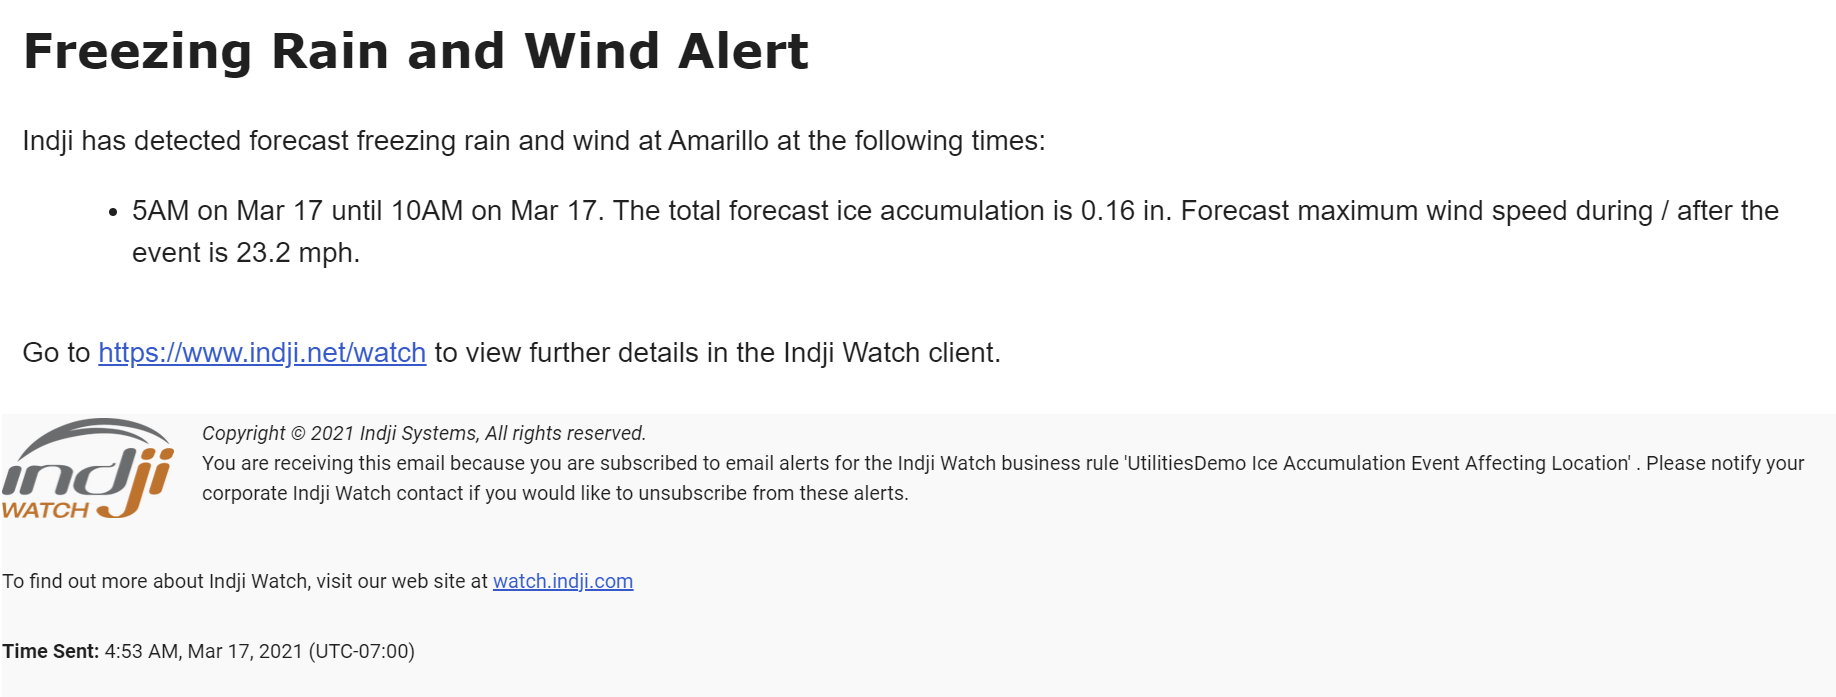 Freezing rain_wind email alert